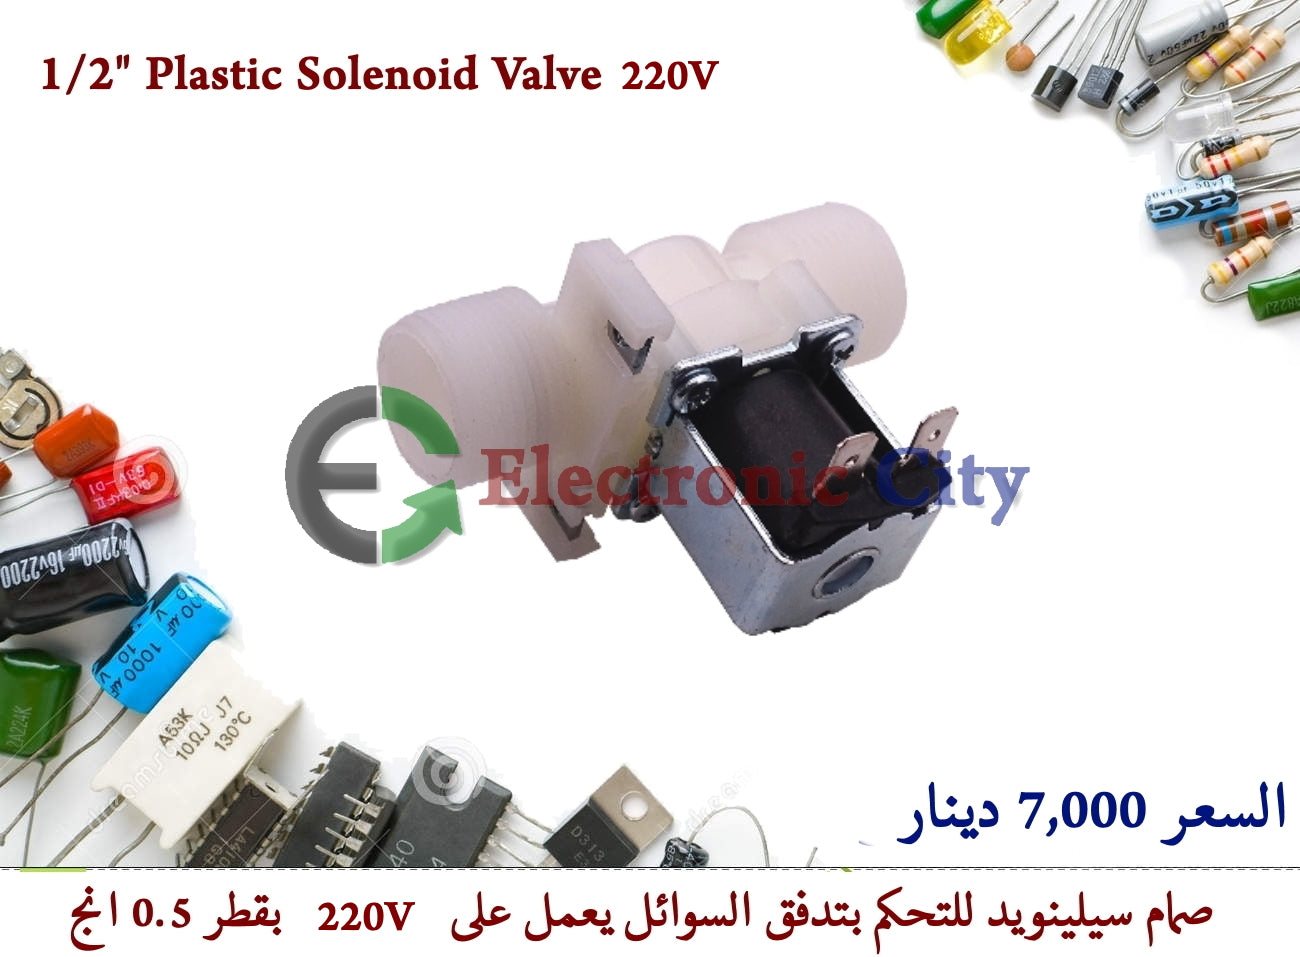 0.5 inch Plastic Solenoid Valve 220V #I10 050117